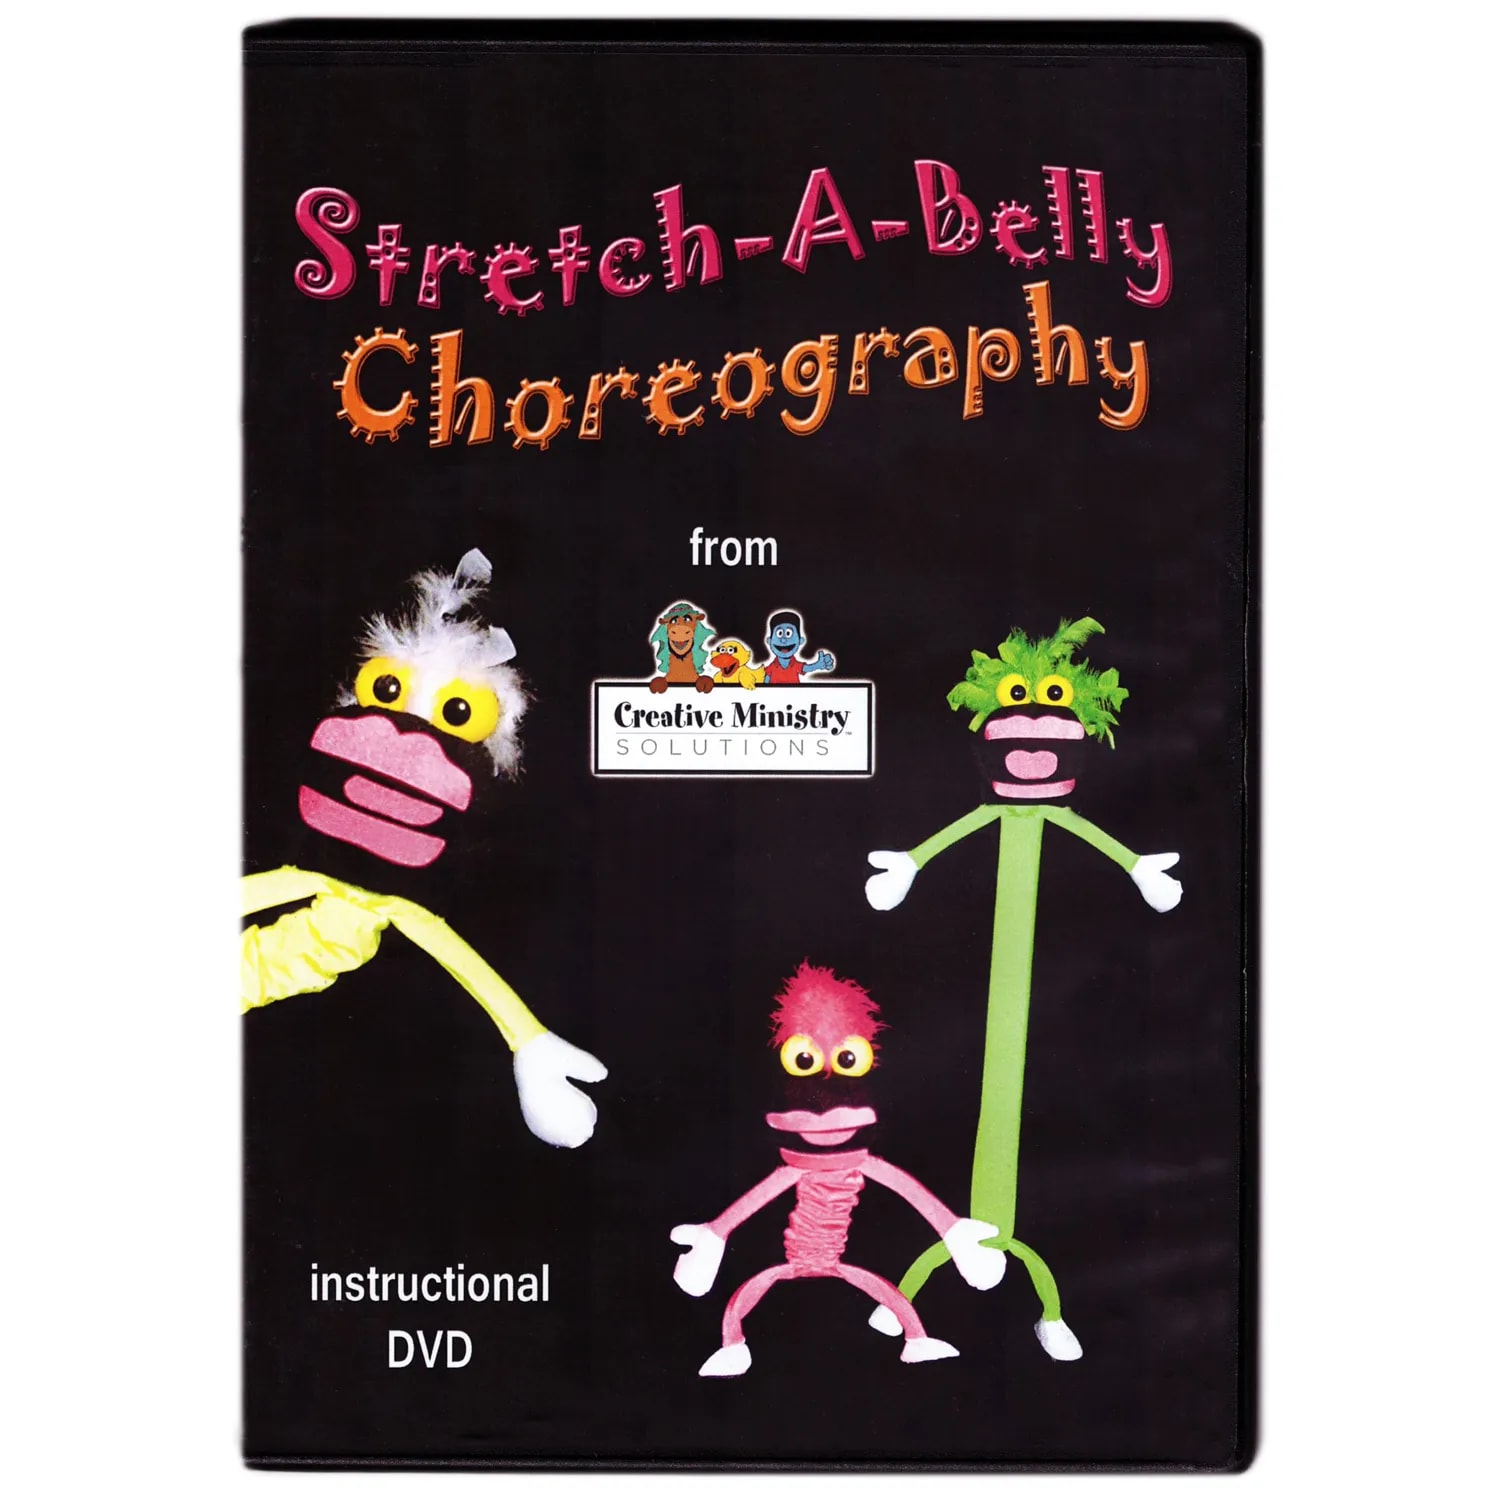 Stretch-A-Belly Choreography DVD